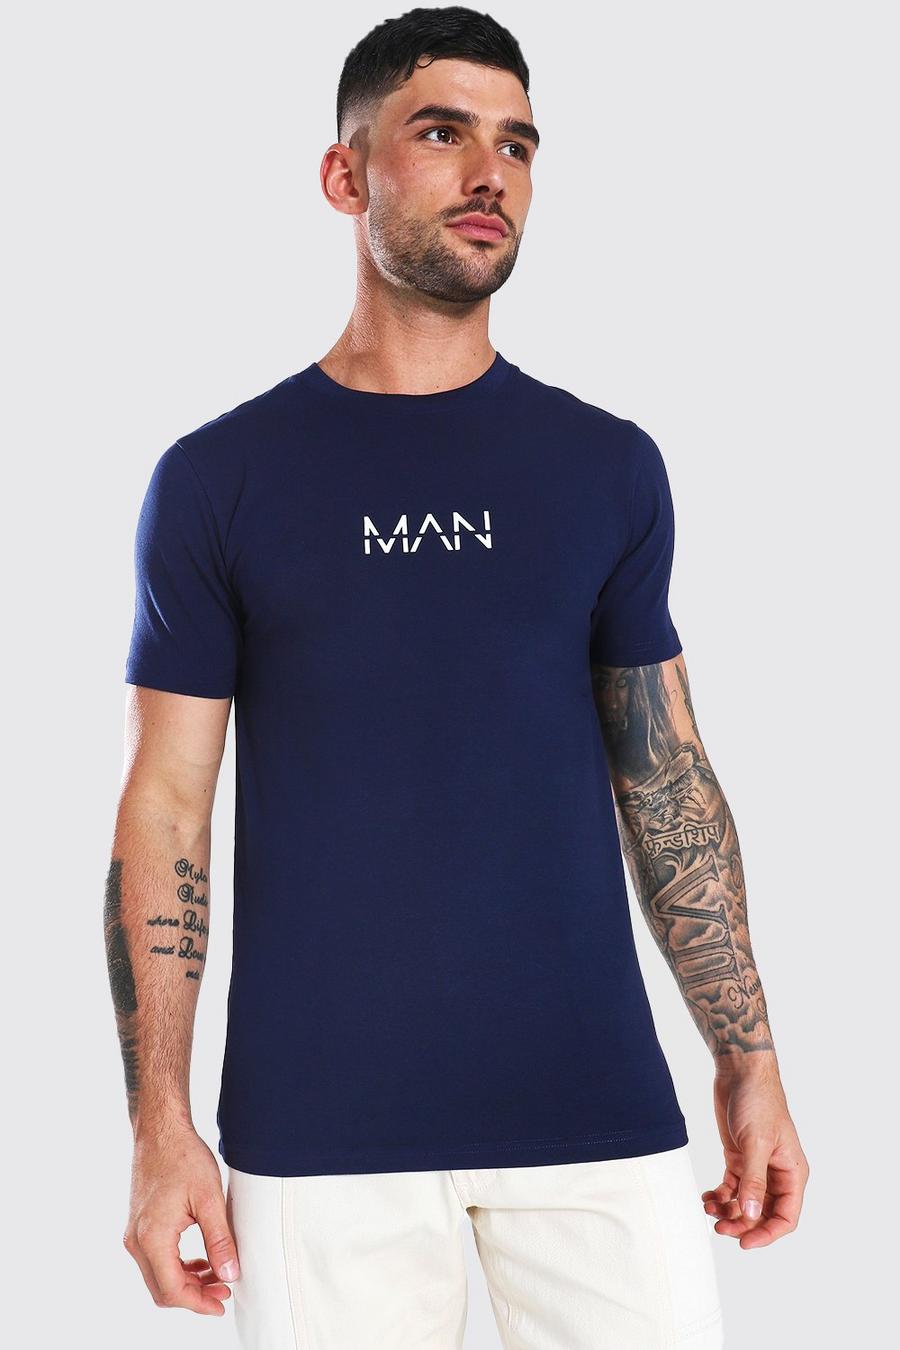 Camiseta MAN Original ajustada al músculo, Navy image number 1